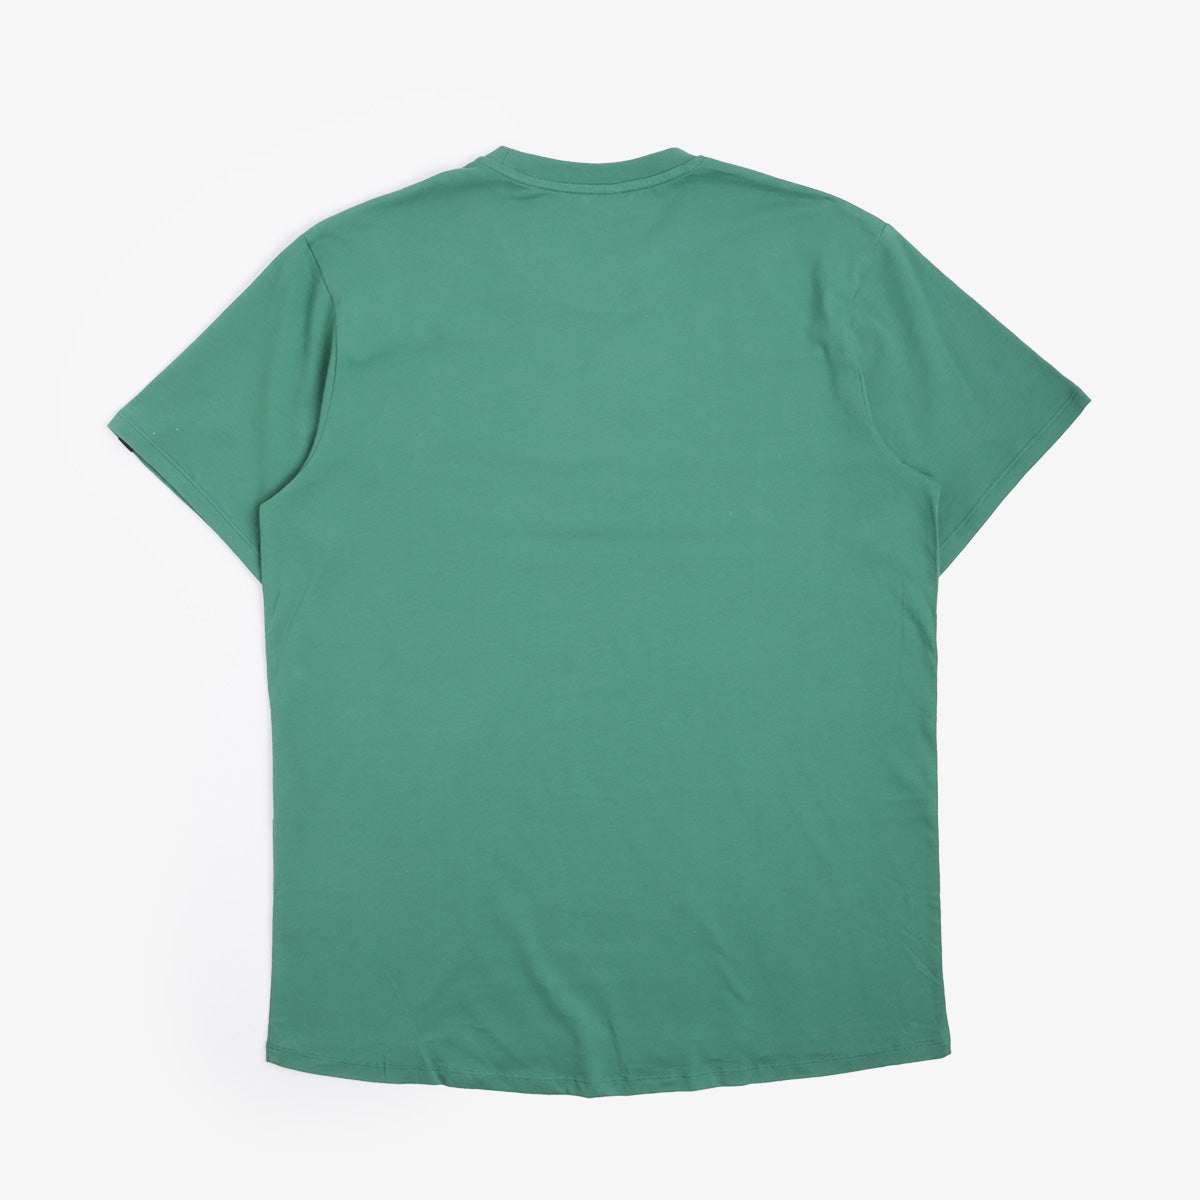 Haglofs Camp T-Shirt